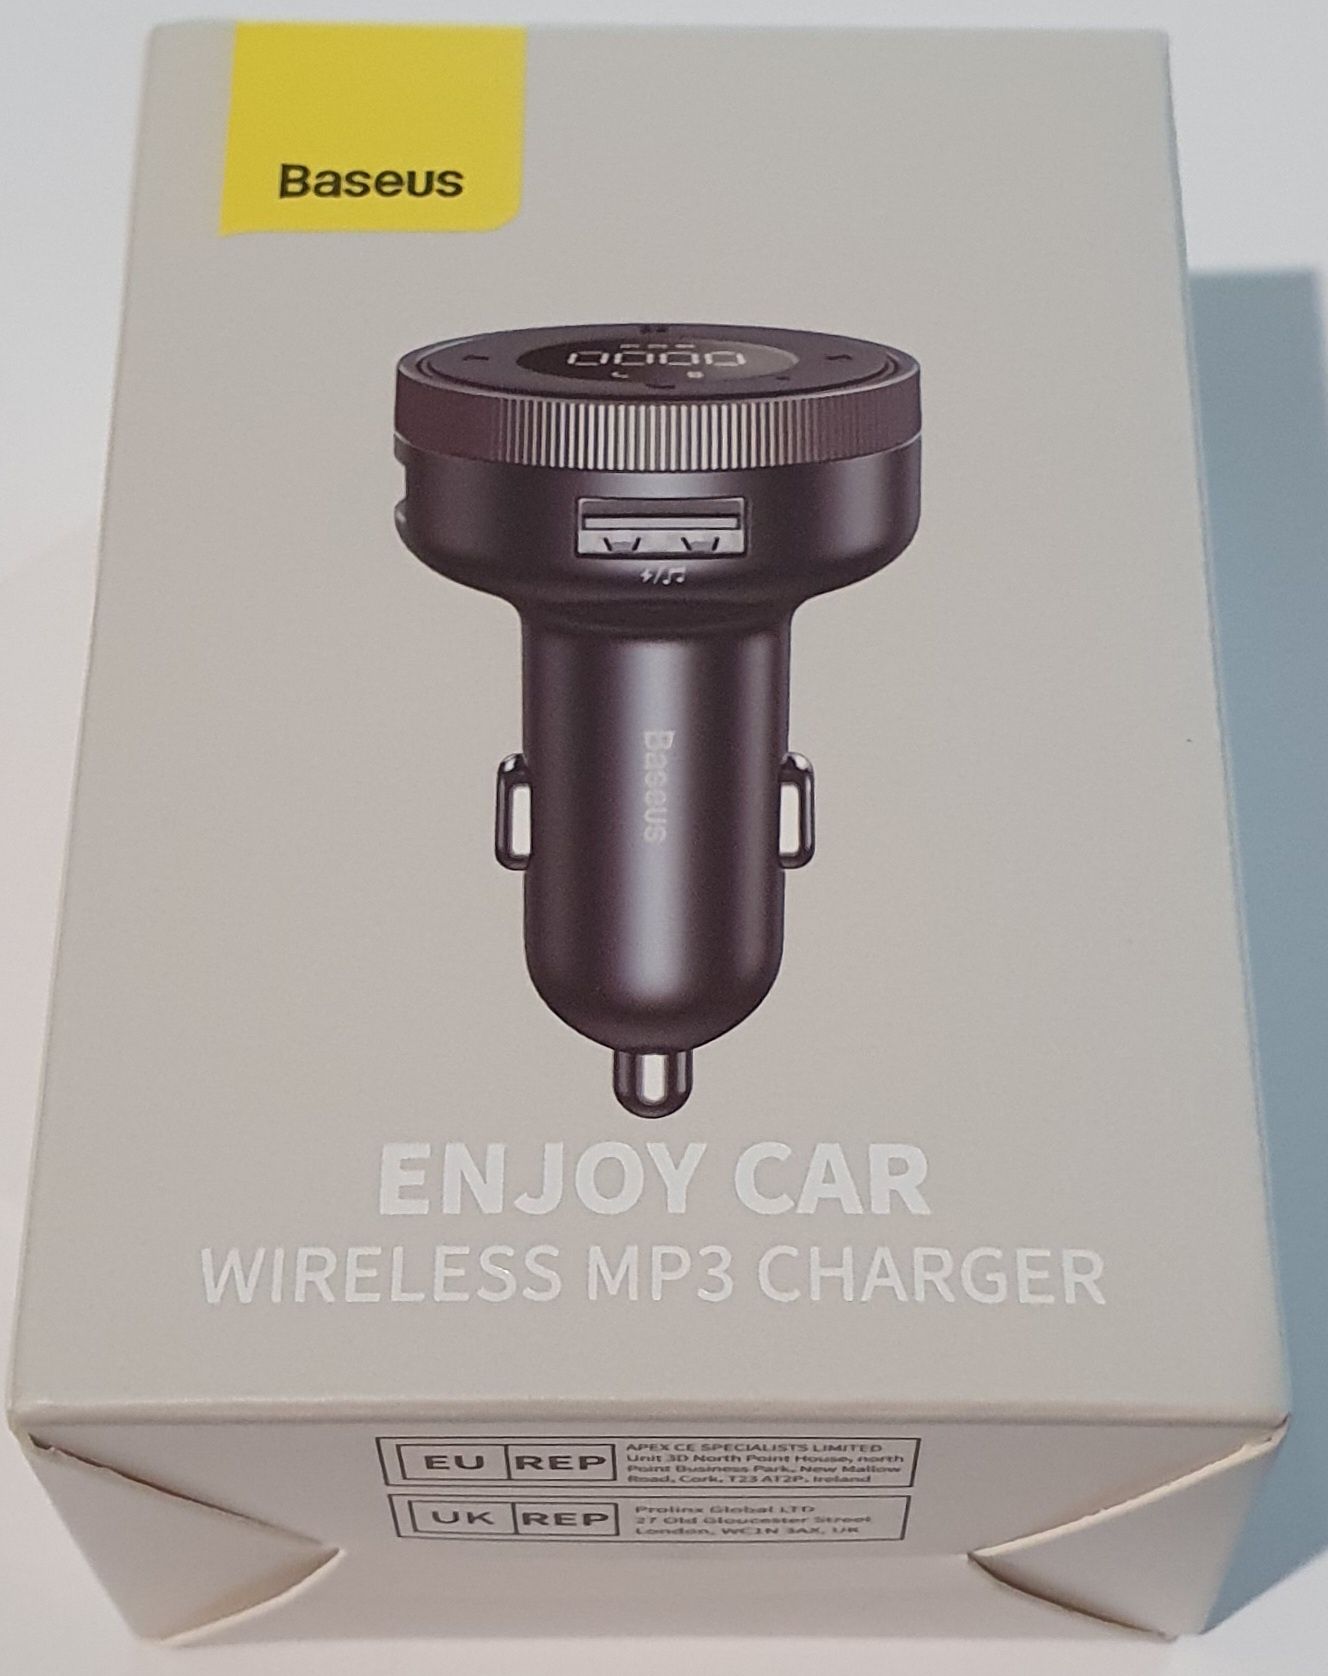 FM-трансмиттер Baseus Enjoy Car Wireless MP3 Charger,(CCLH-01) Black